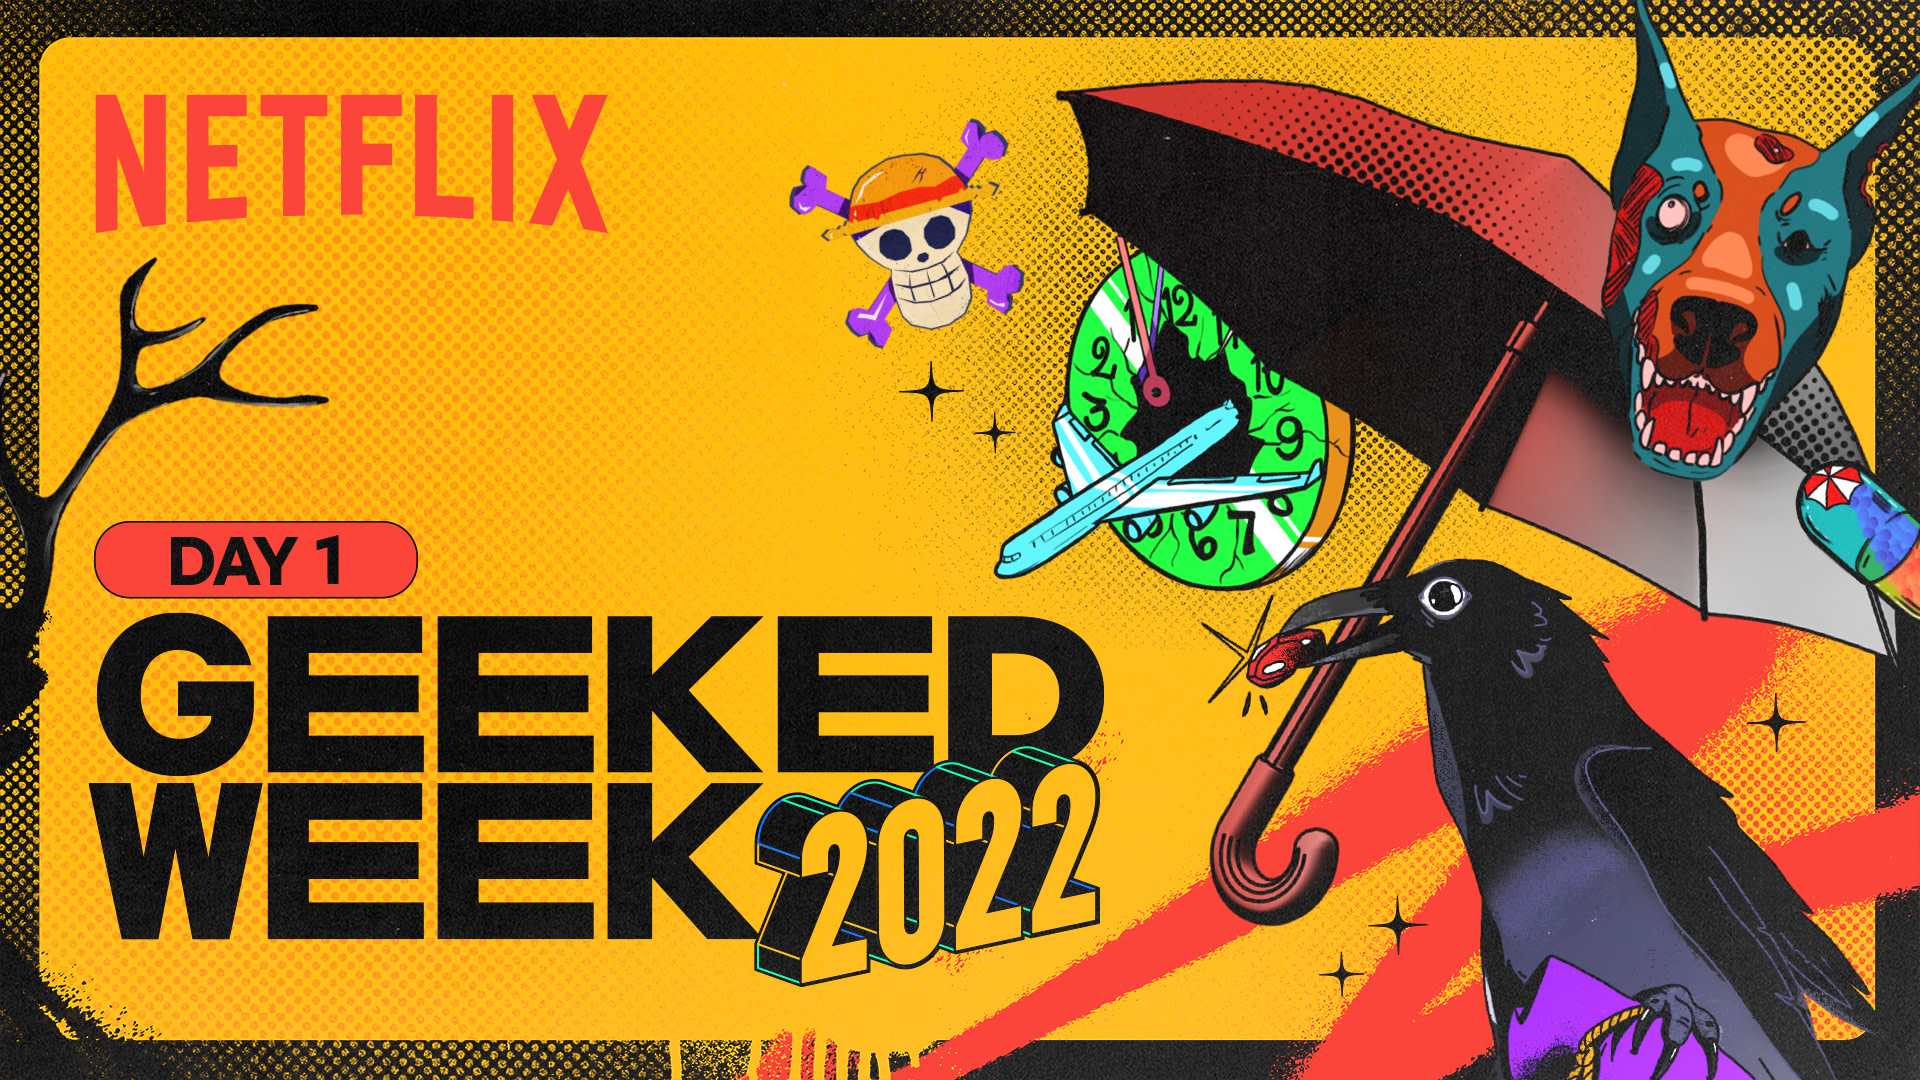 Primer día de la ‘Semana Geeked’ de Netflix